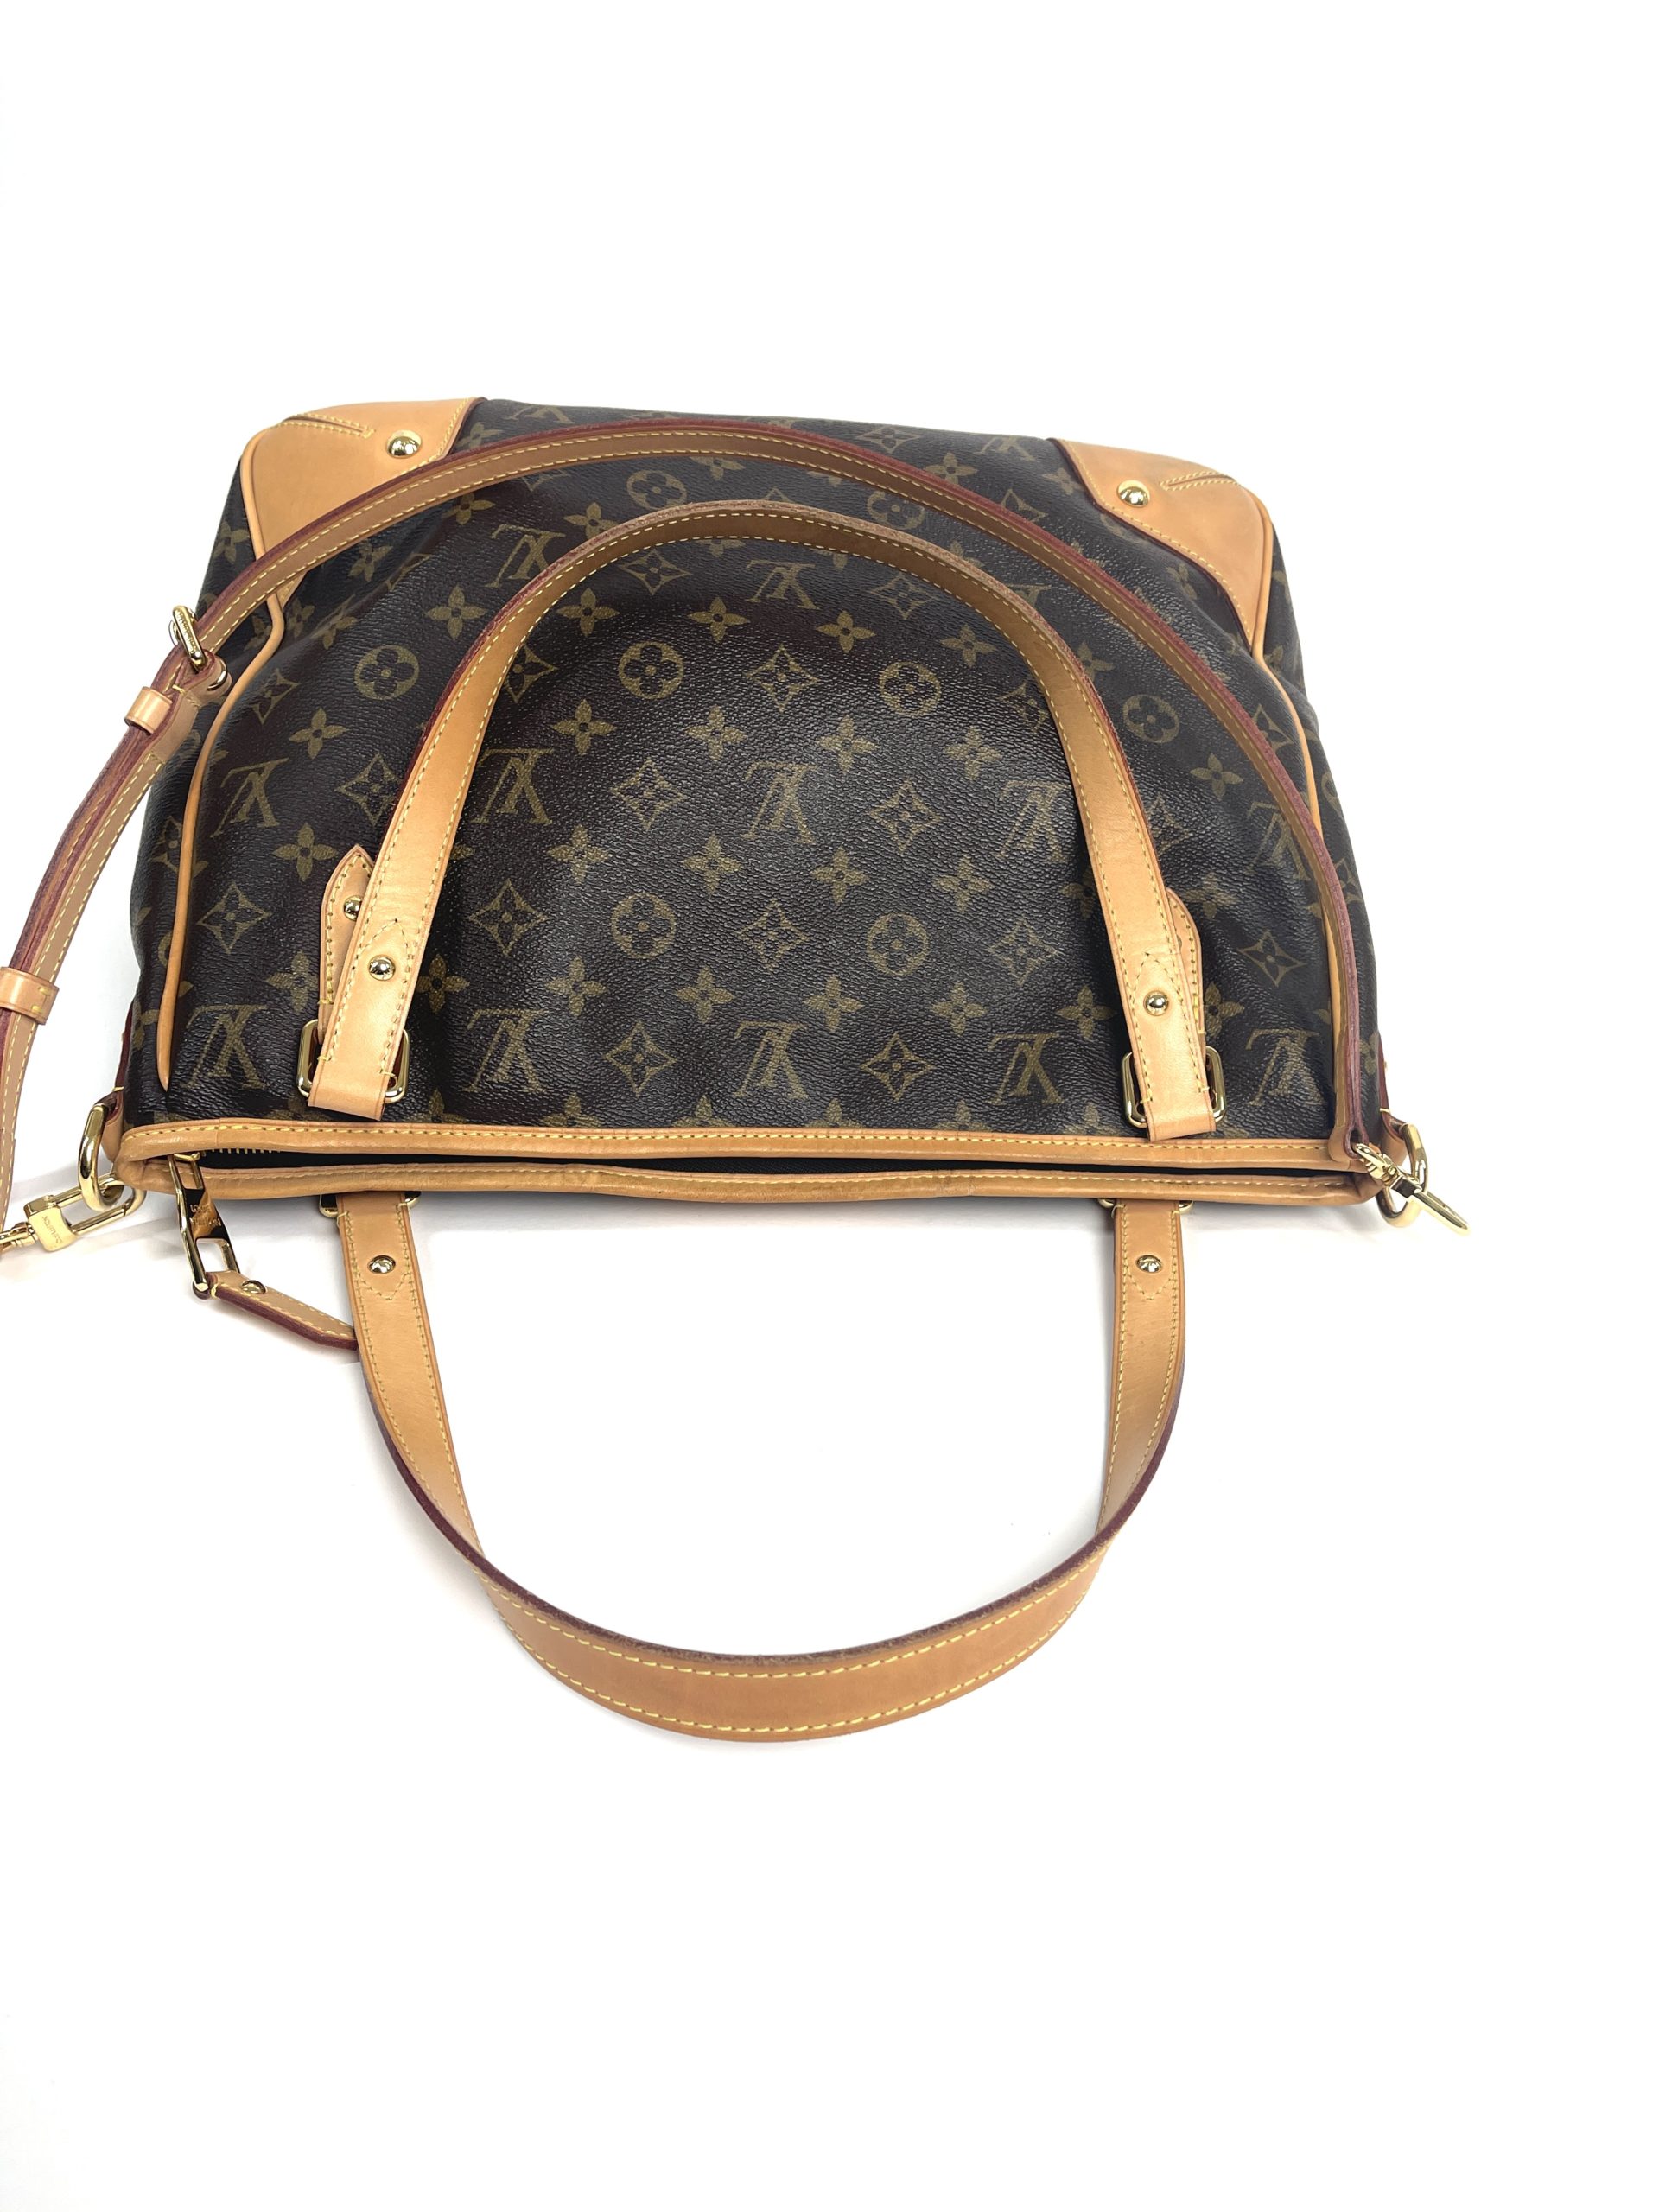 ❤ Estrela GM Louis Vuitton Monogram ❤Dust Bag Shoulder Handbag 2 Straps  100% LV